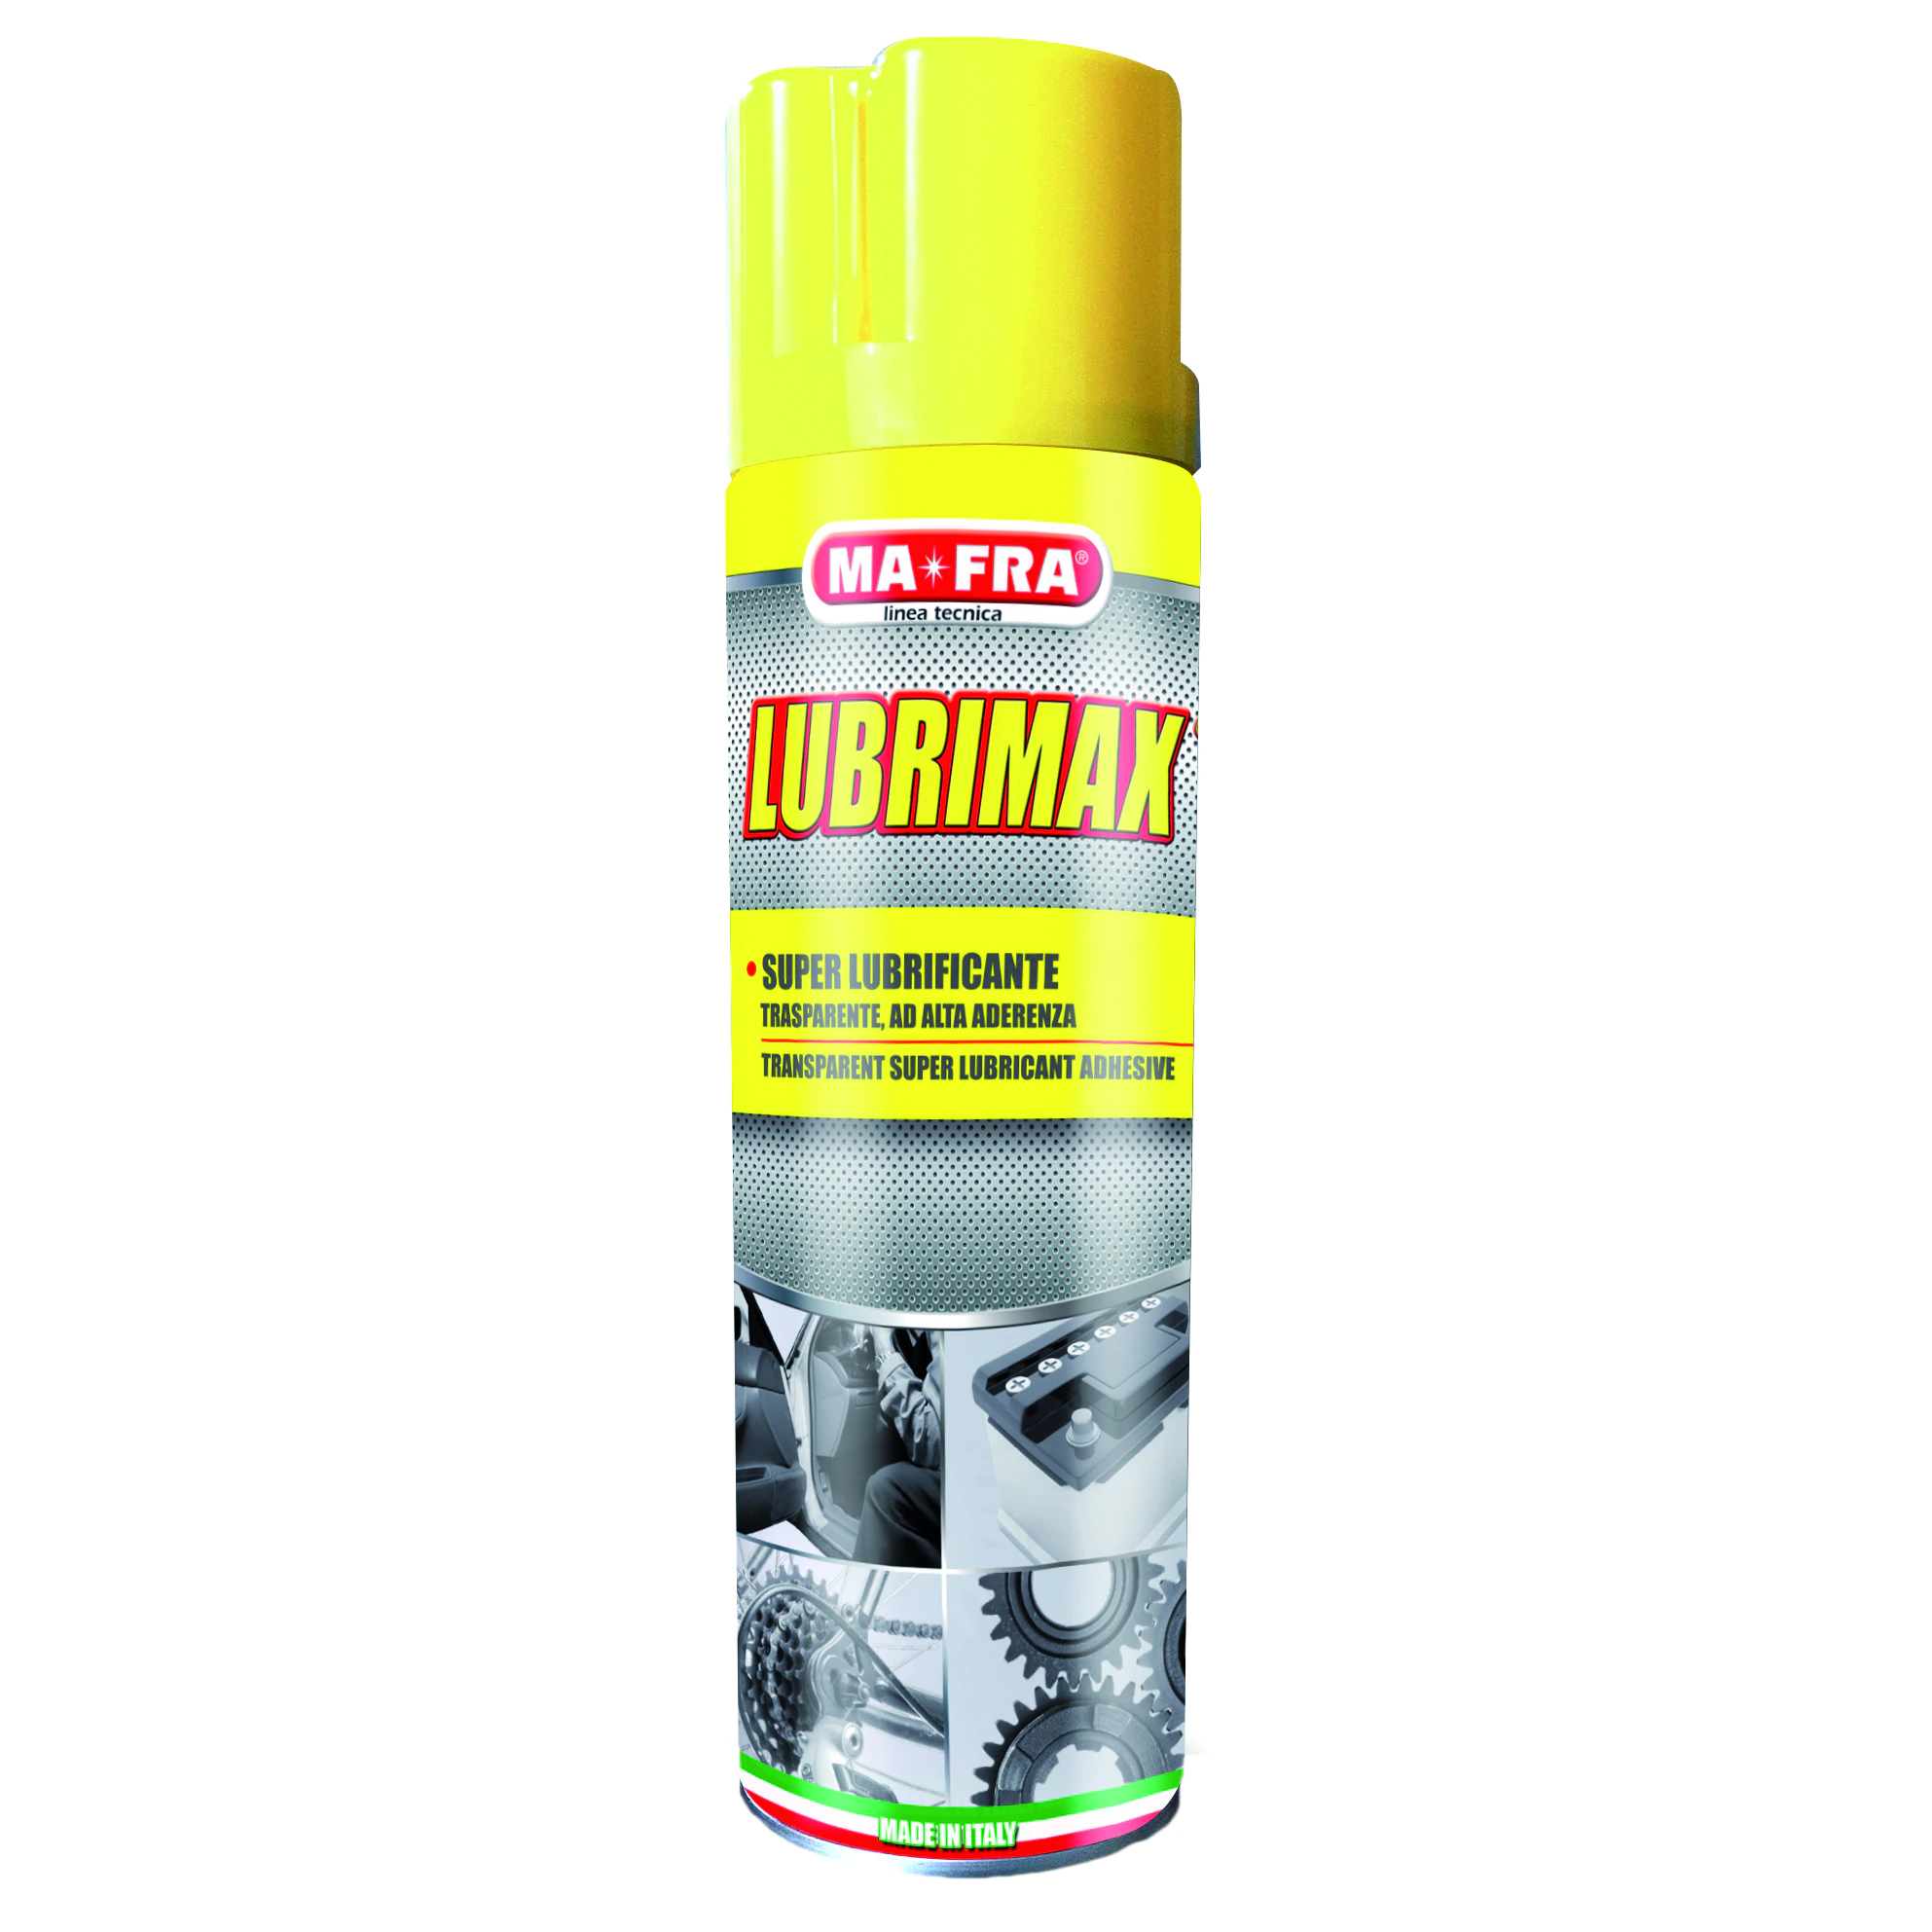 Superlubrifiant aderent incolor MA-FRA Lubrimax, 500 ml